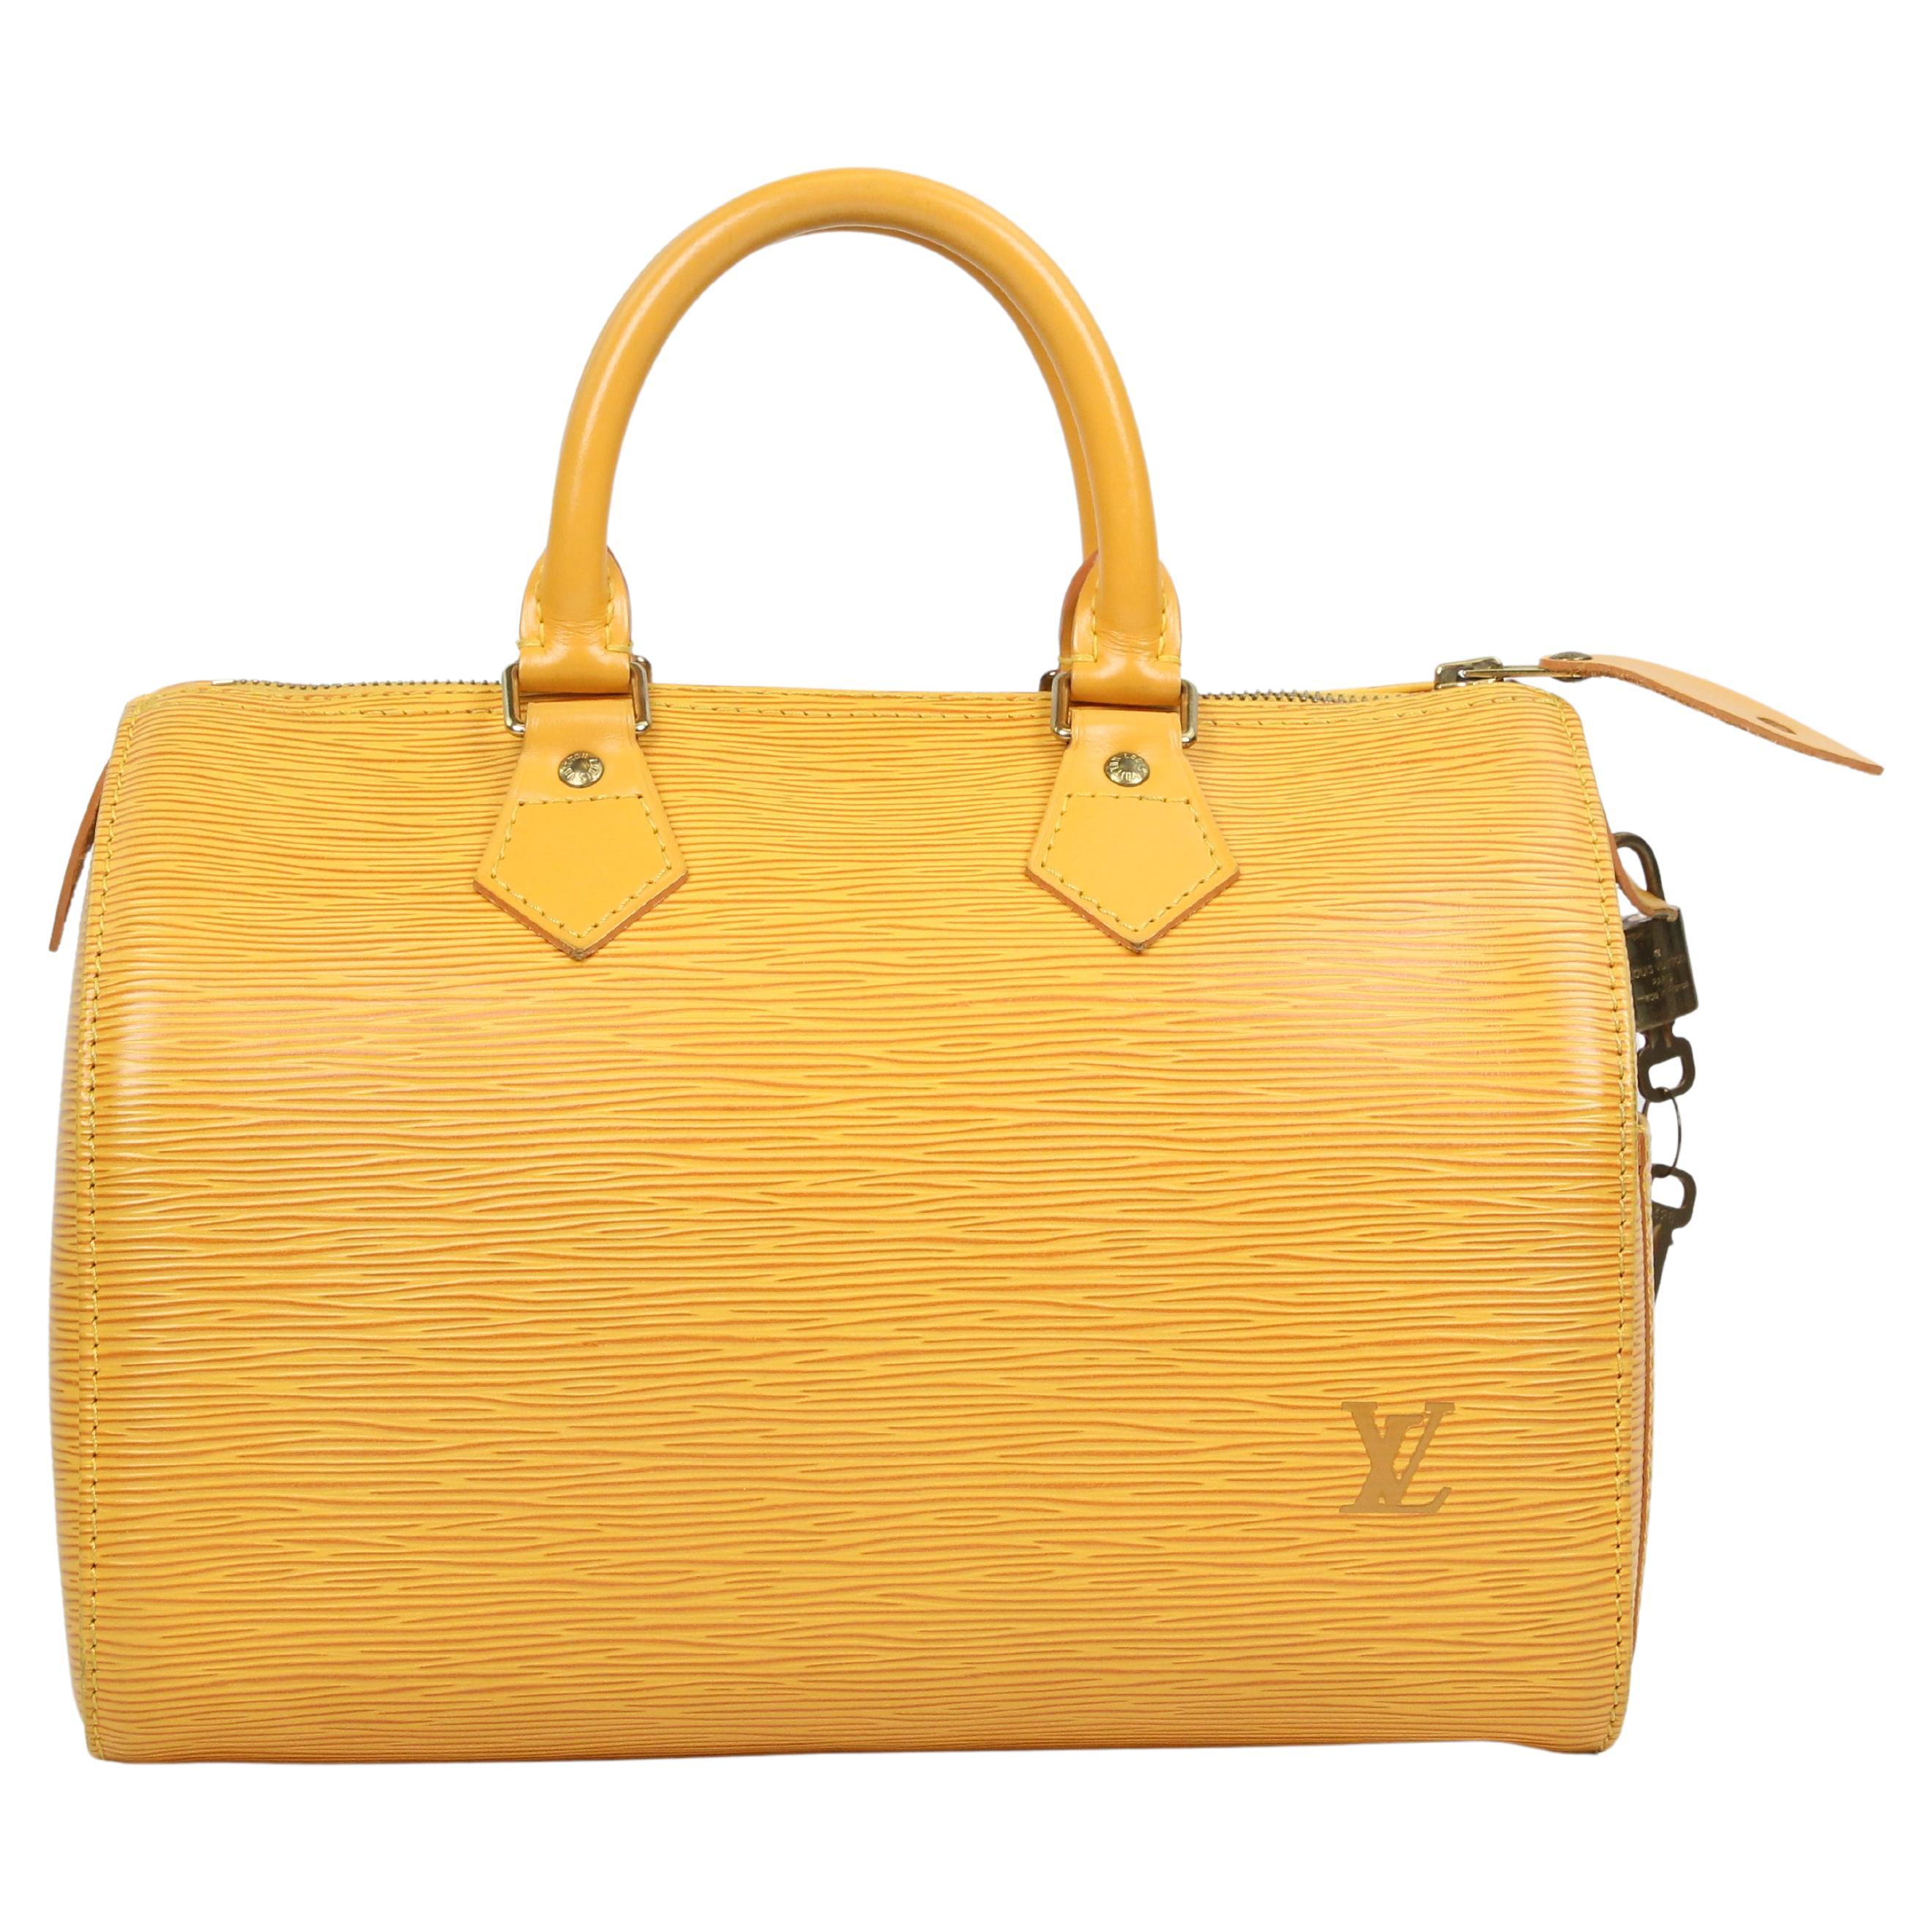 Louis Vuitton Speedy 25 leather handbag For Sale